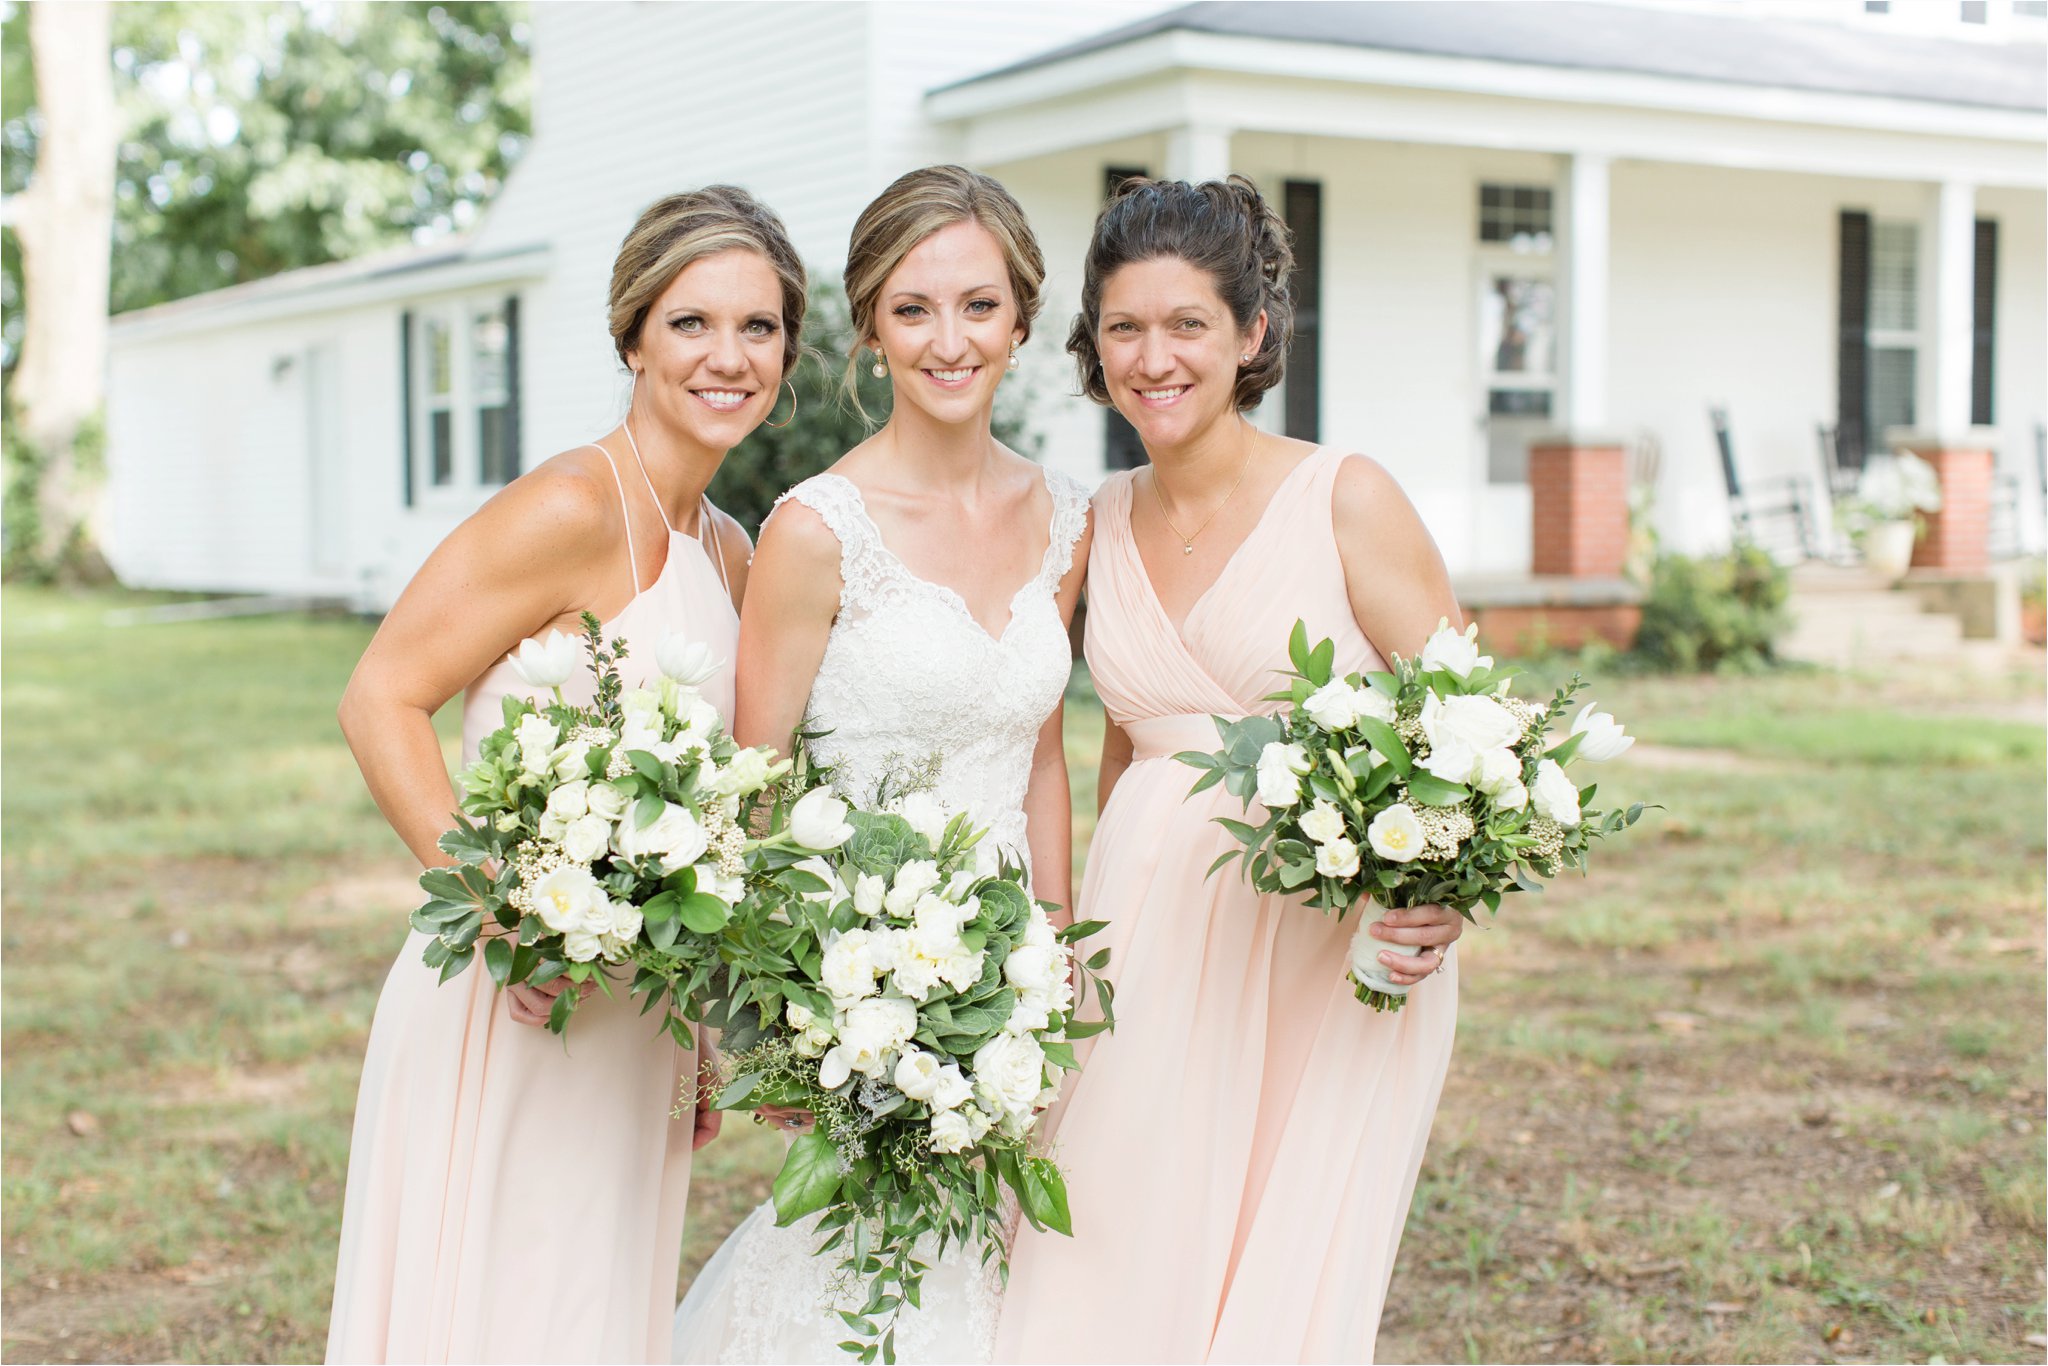 Outdoor Southern Wedding | South Carolina Wedding Photography | Christa Rene Photography